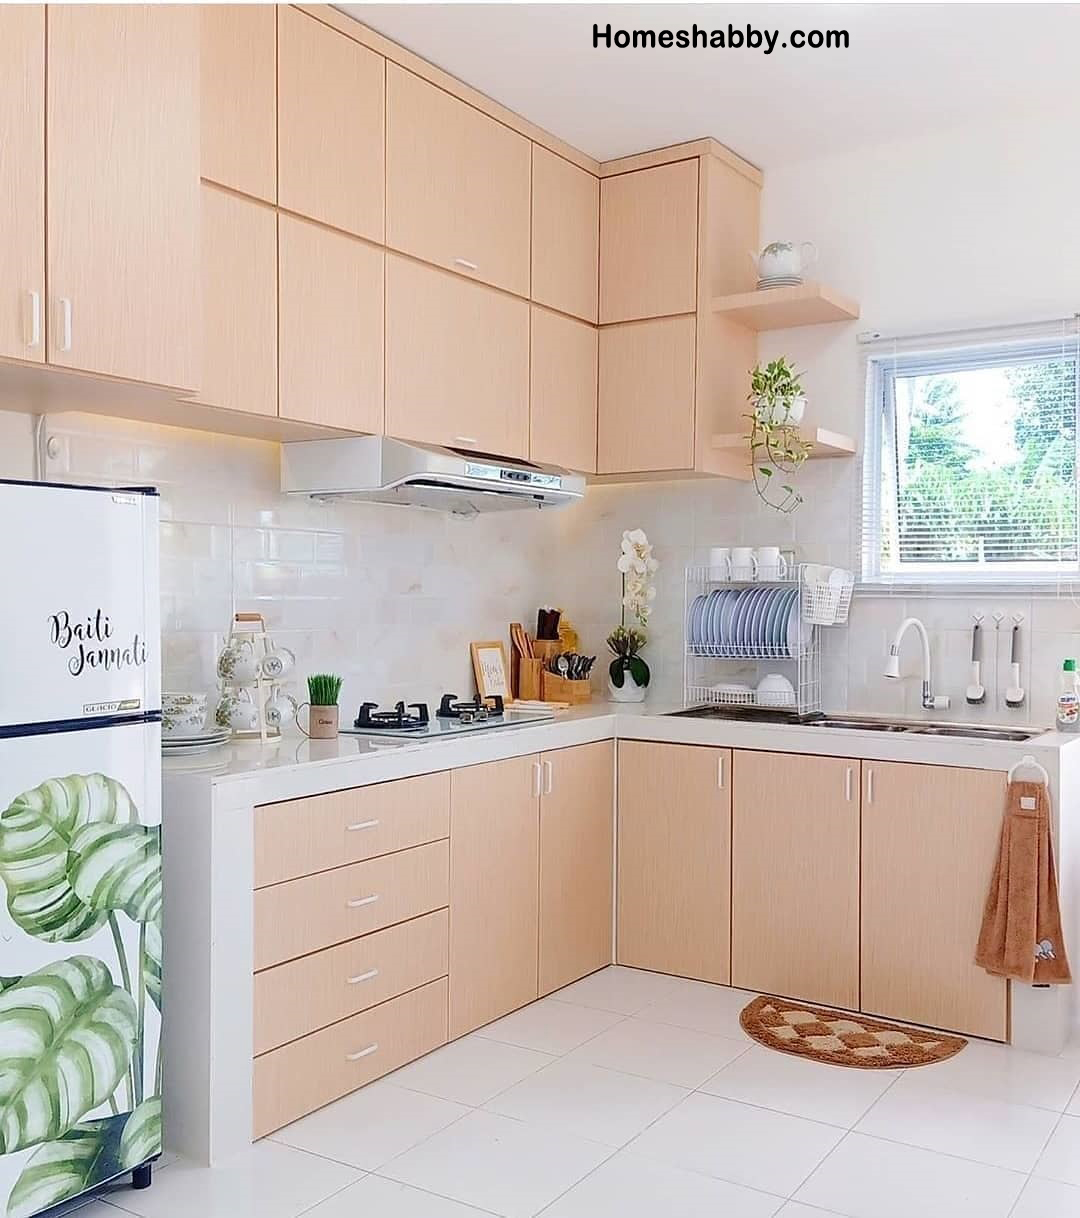 6 Ide Desain Kitchen Set Minimalis Dapur Kecil Dan Sempit Rumah Minimalis Modern Homeshabbycom Design Home Plans